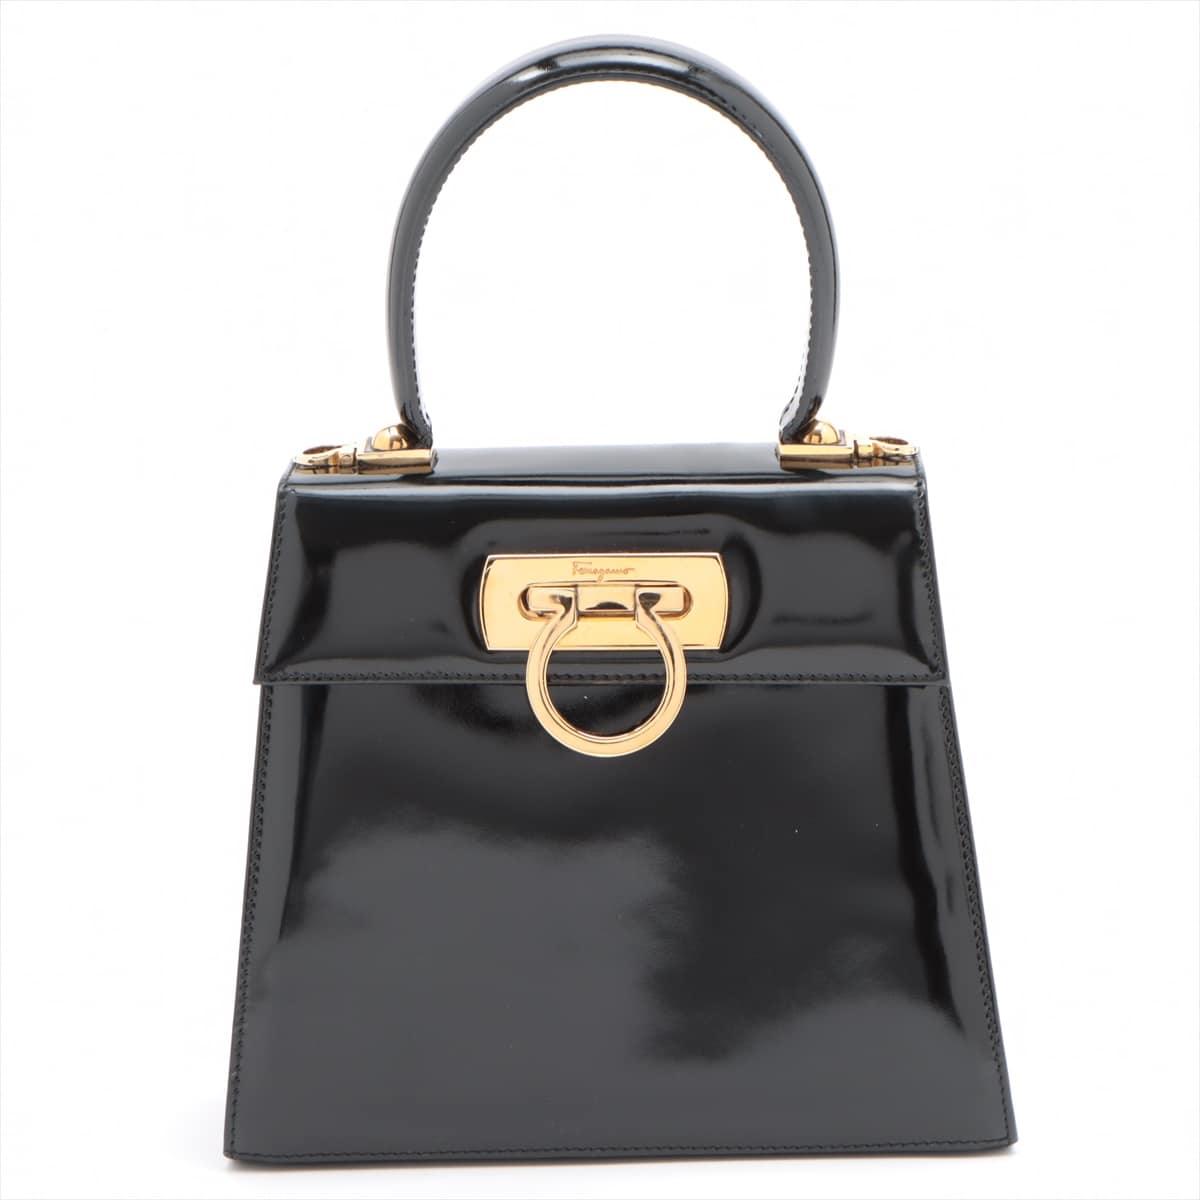 Ferragamo Gancini Patent leather 2way handbag Black